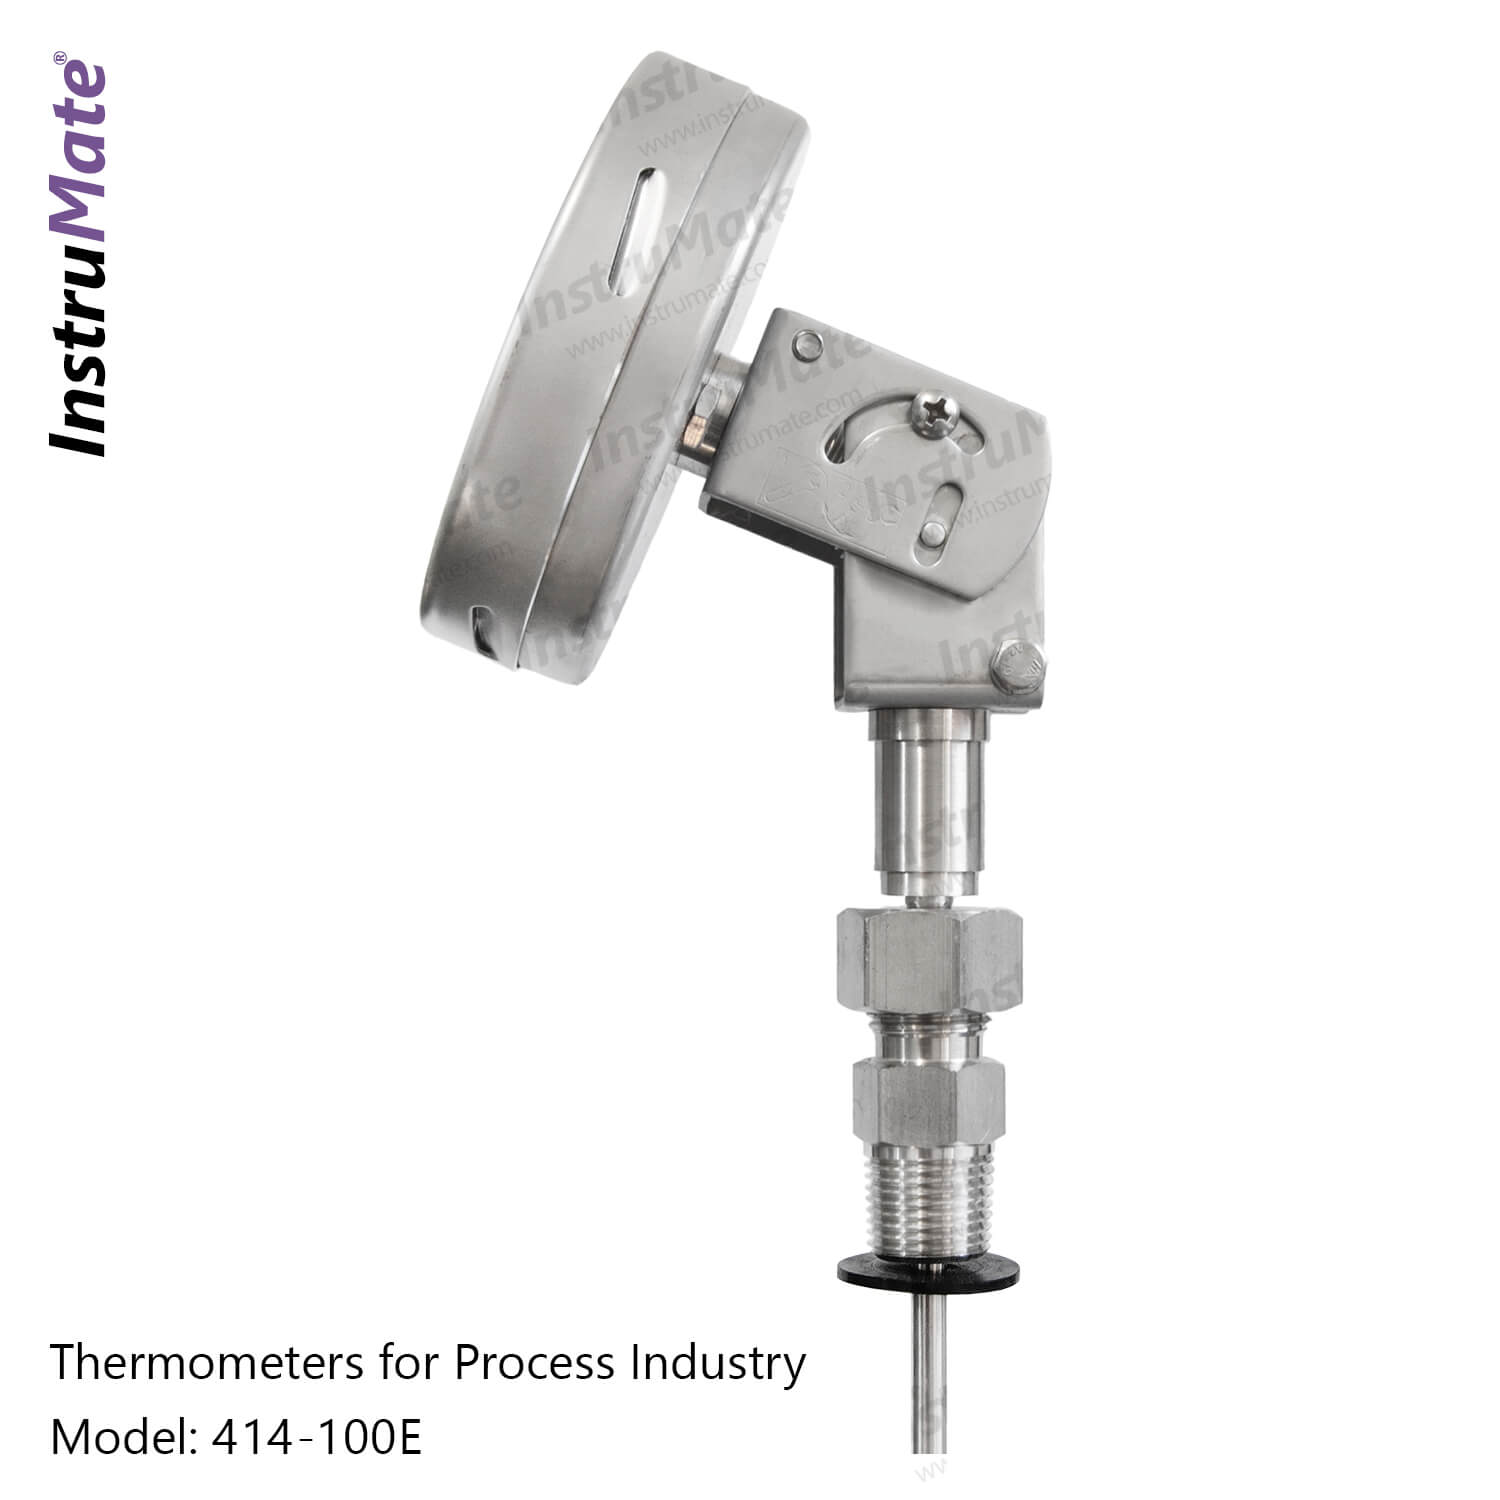 Process thermometer - 414 - InstruMate